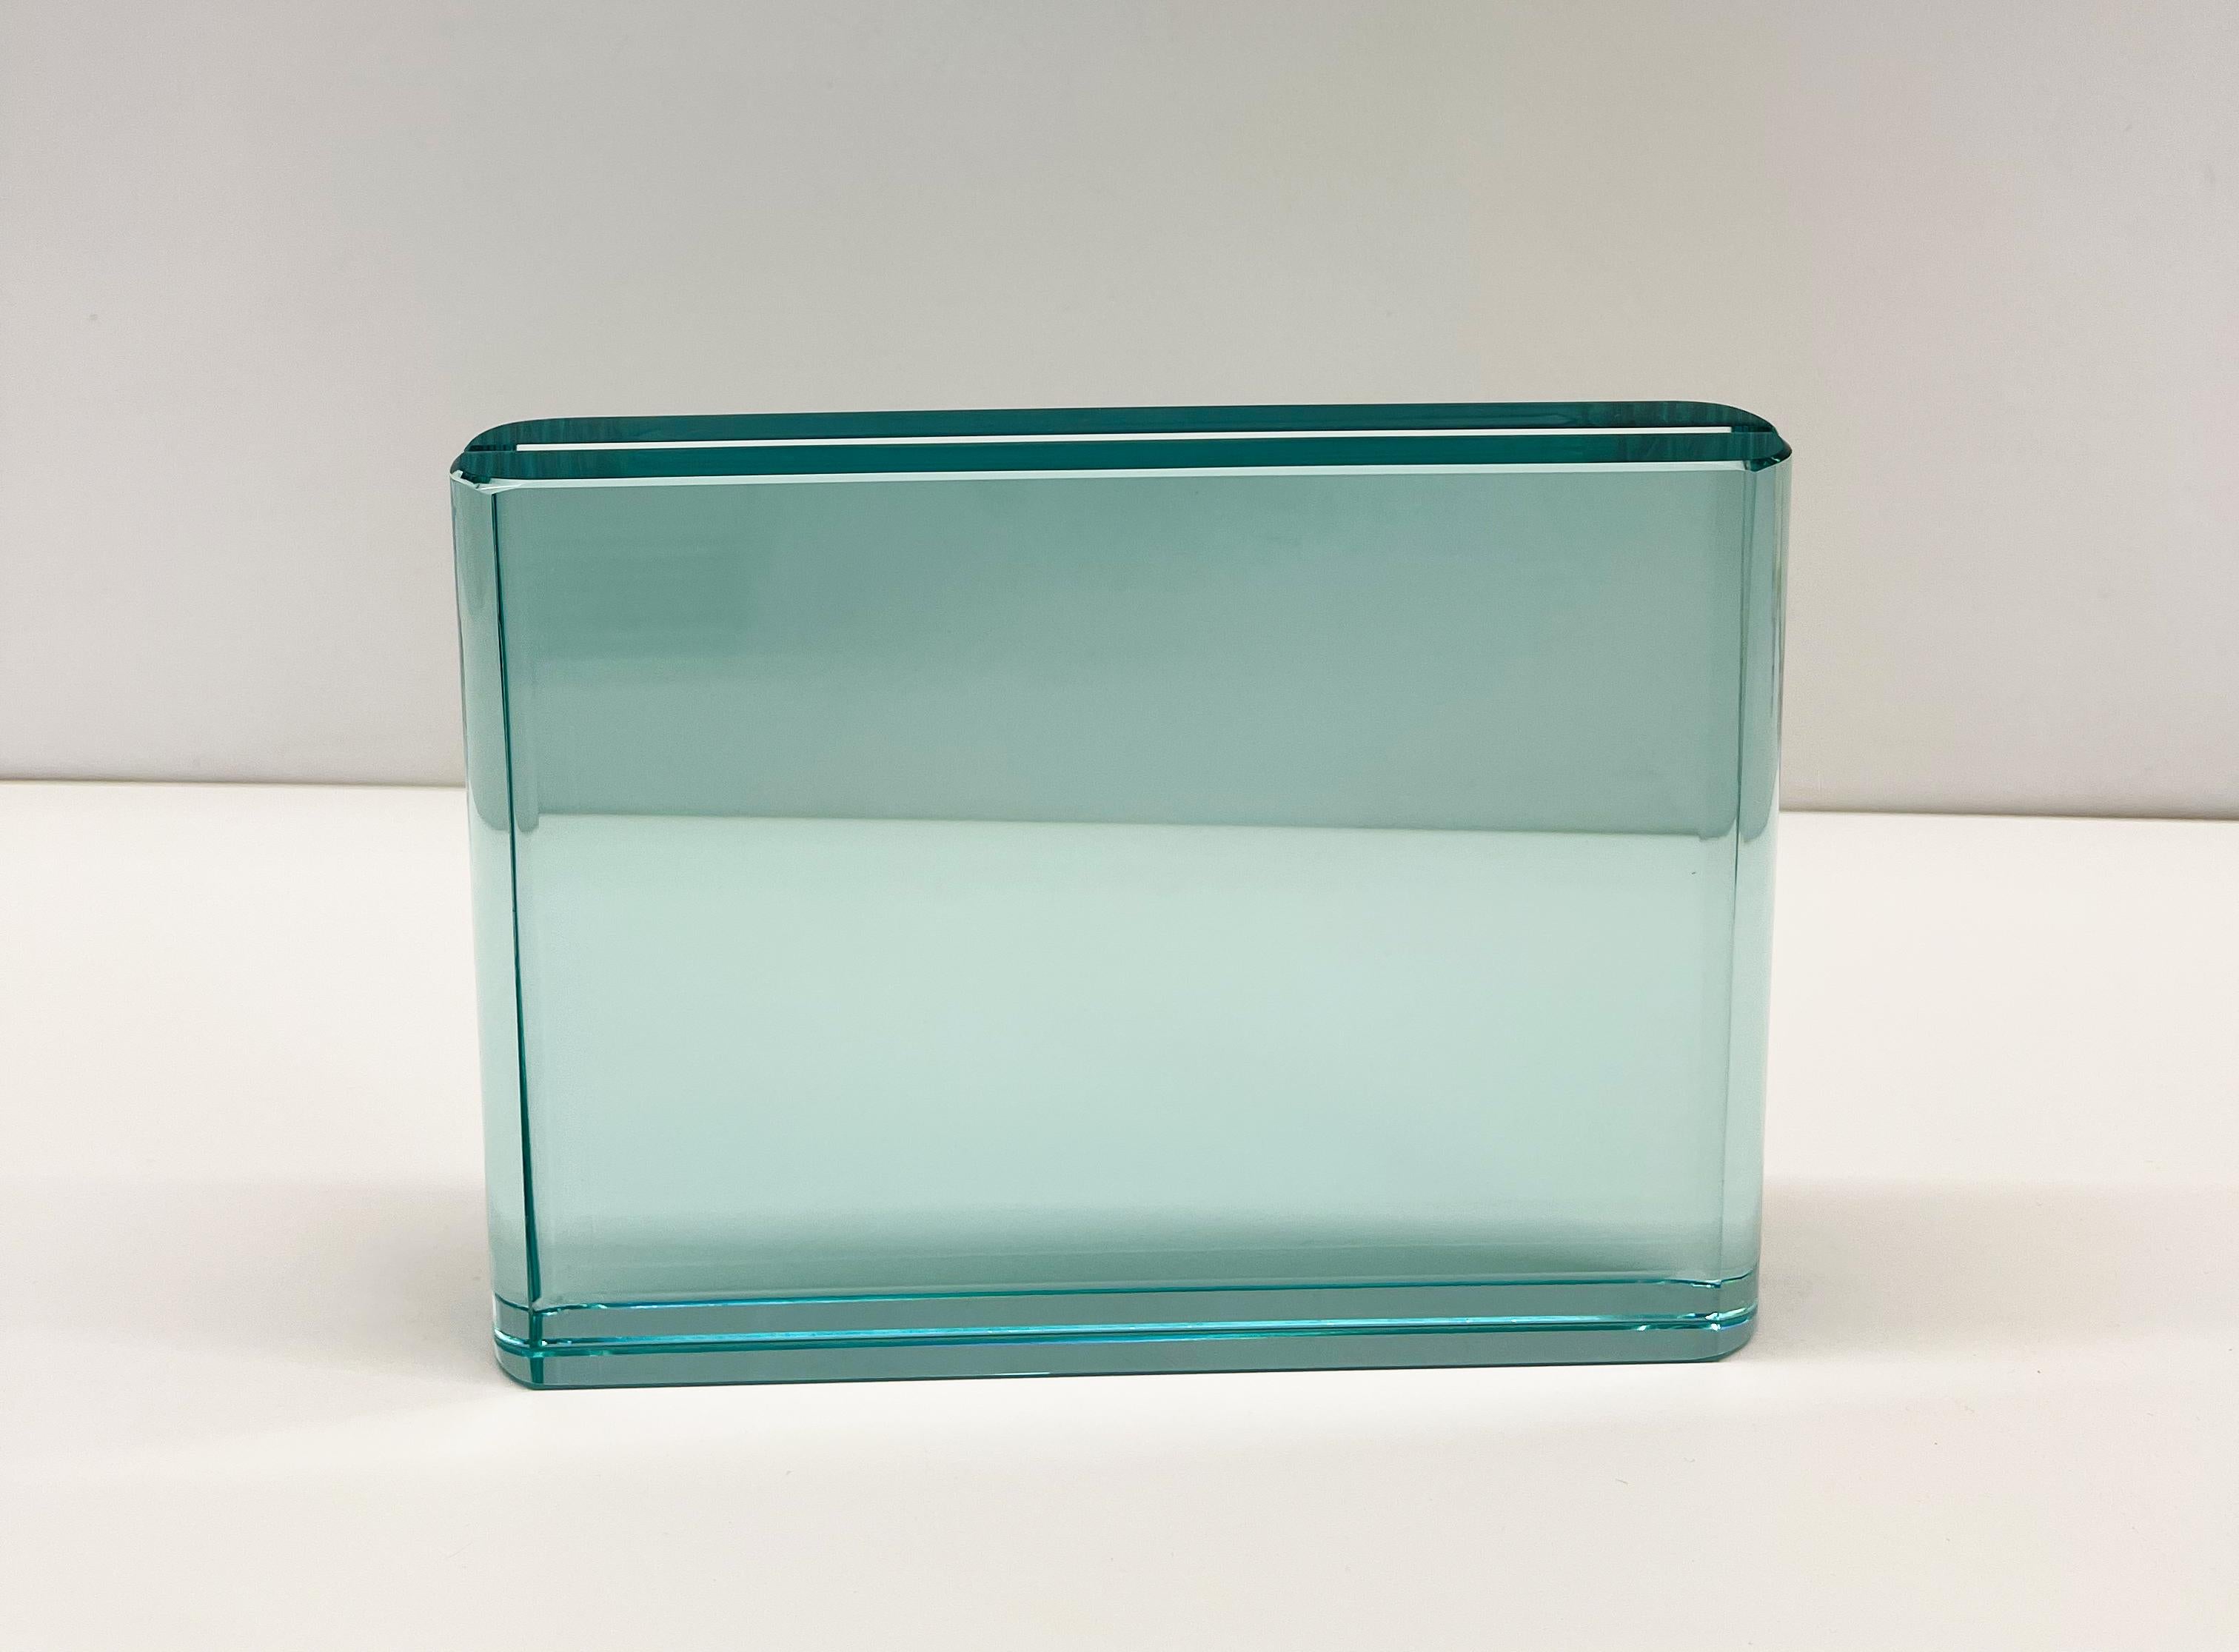 Italian Contemporary Handmade Aquamarine Crystal Horizontal Photo Frame by Ghirò Studio For Sale